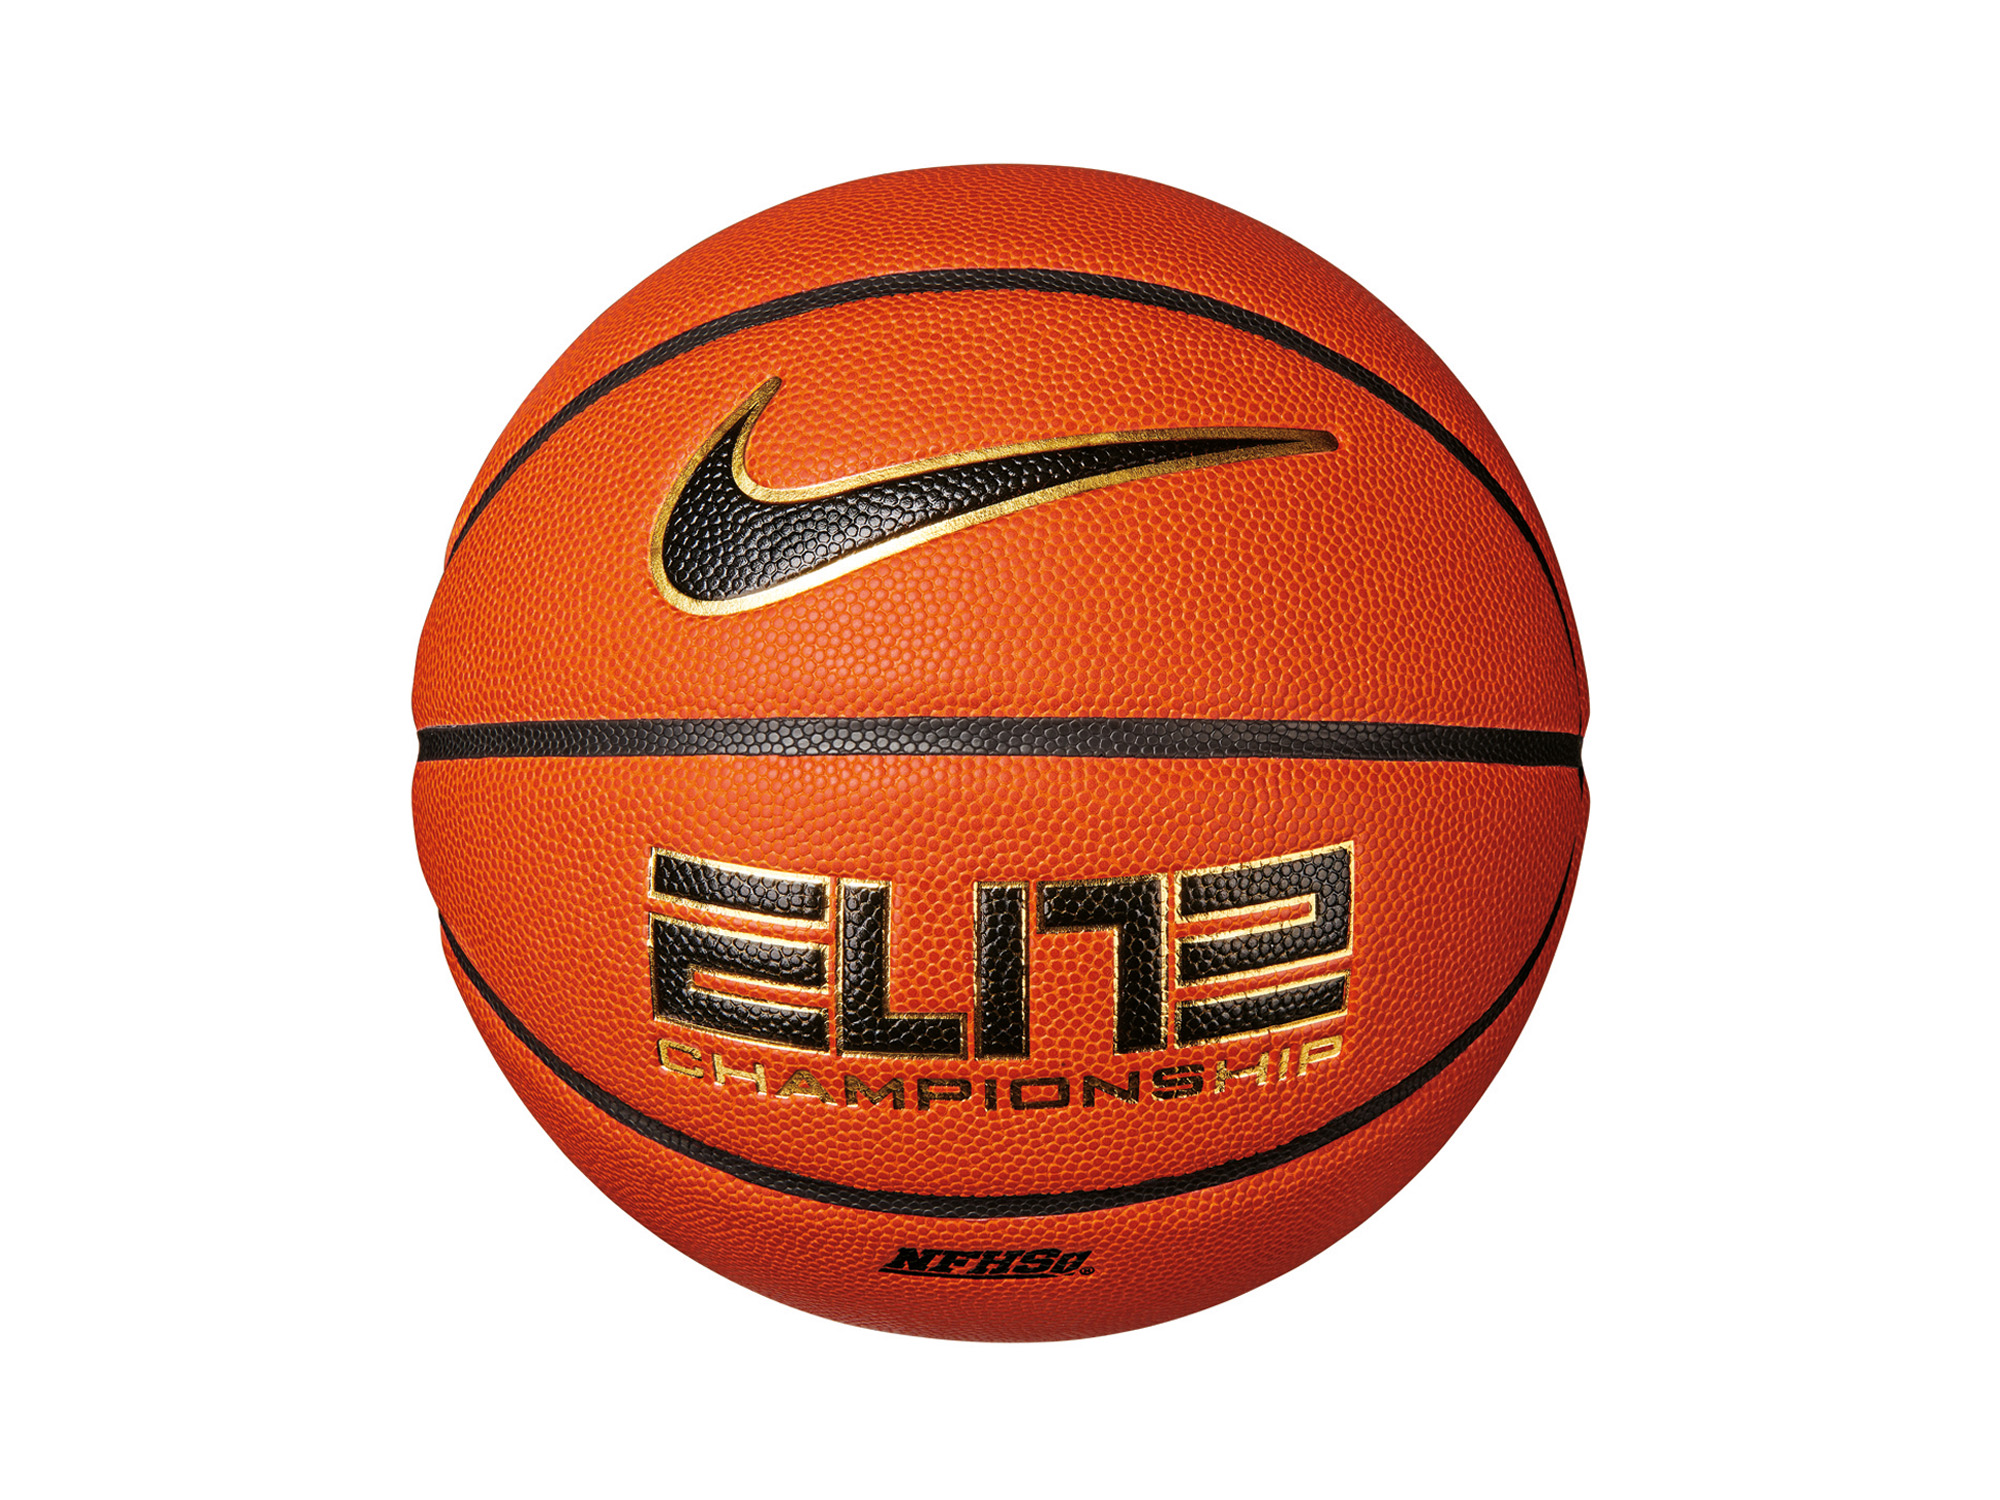 Nike Elite Championship 8P 2.0 Indoor Basketball